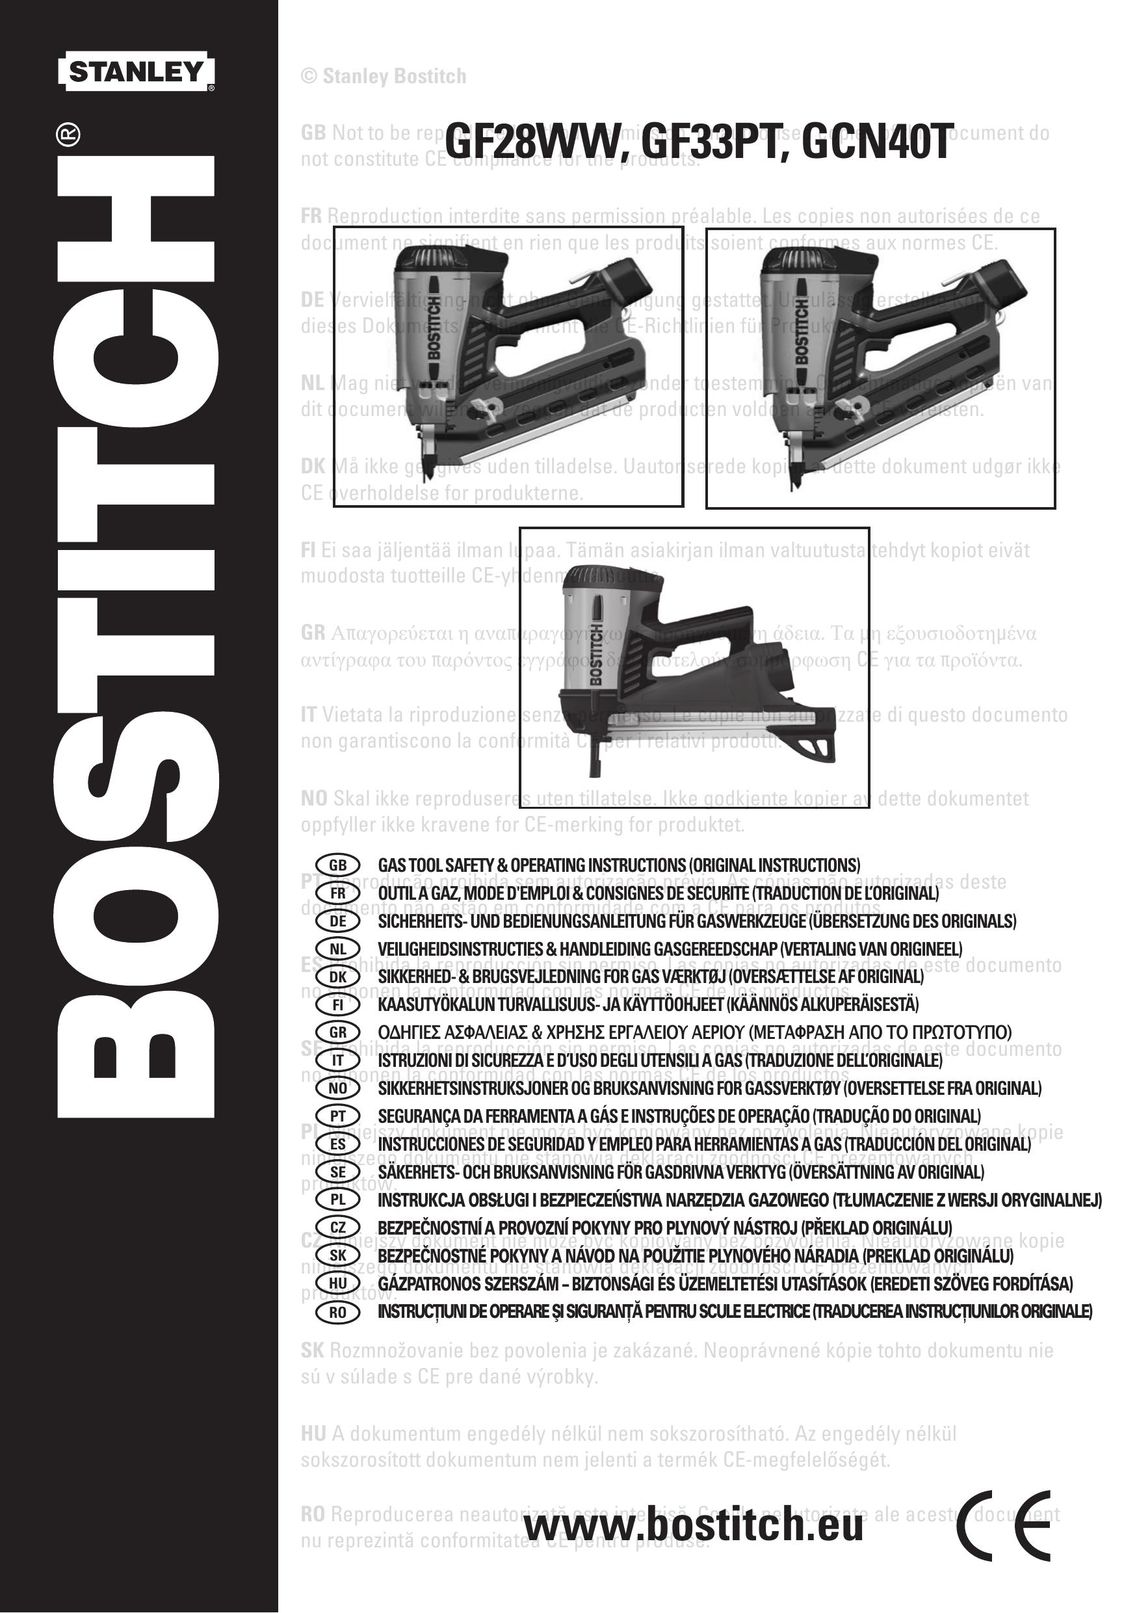 Bostitch GF33PT Nail Gun User Manual